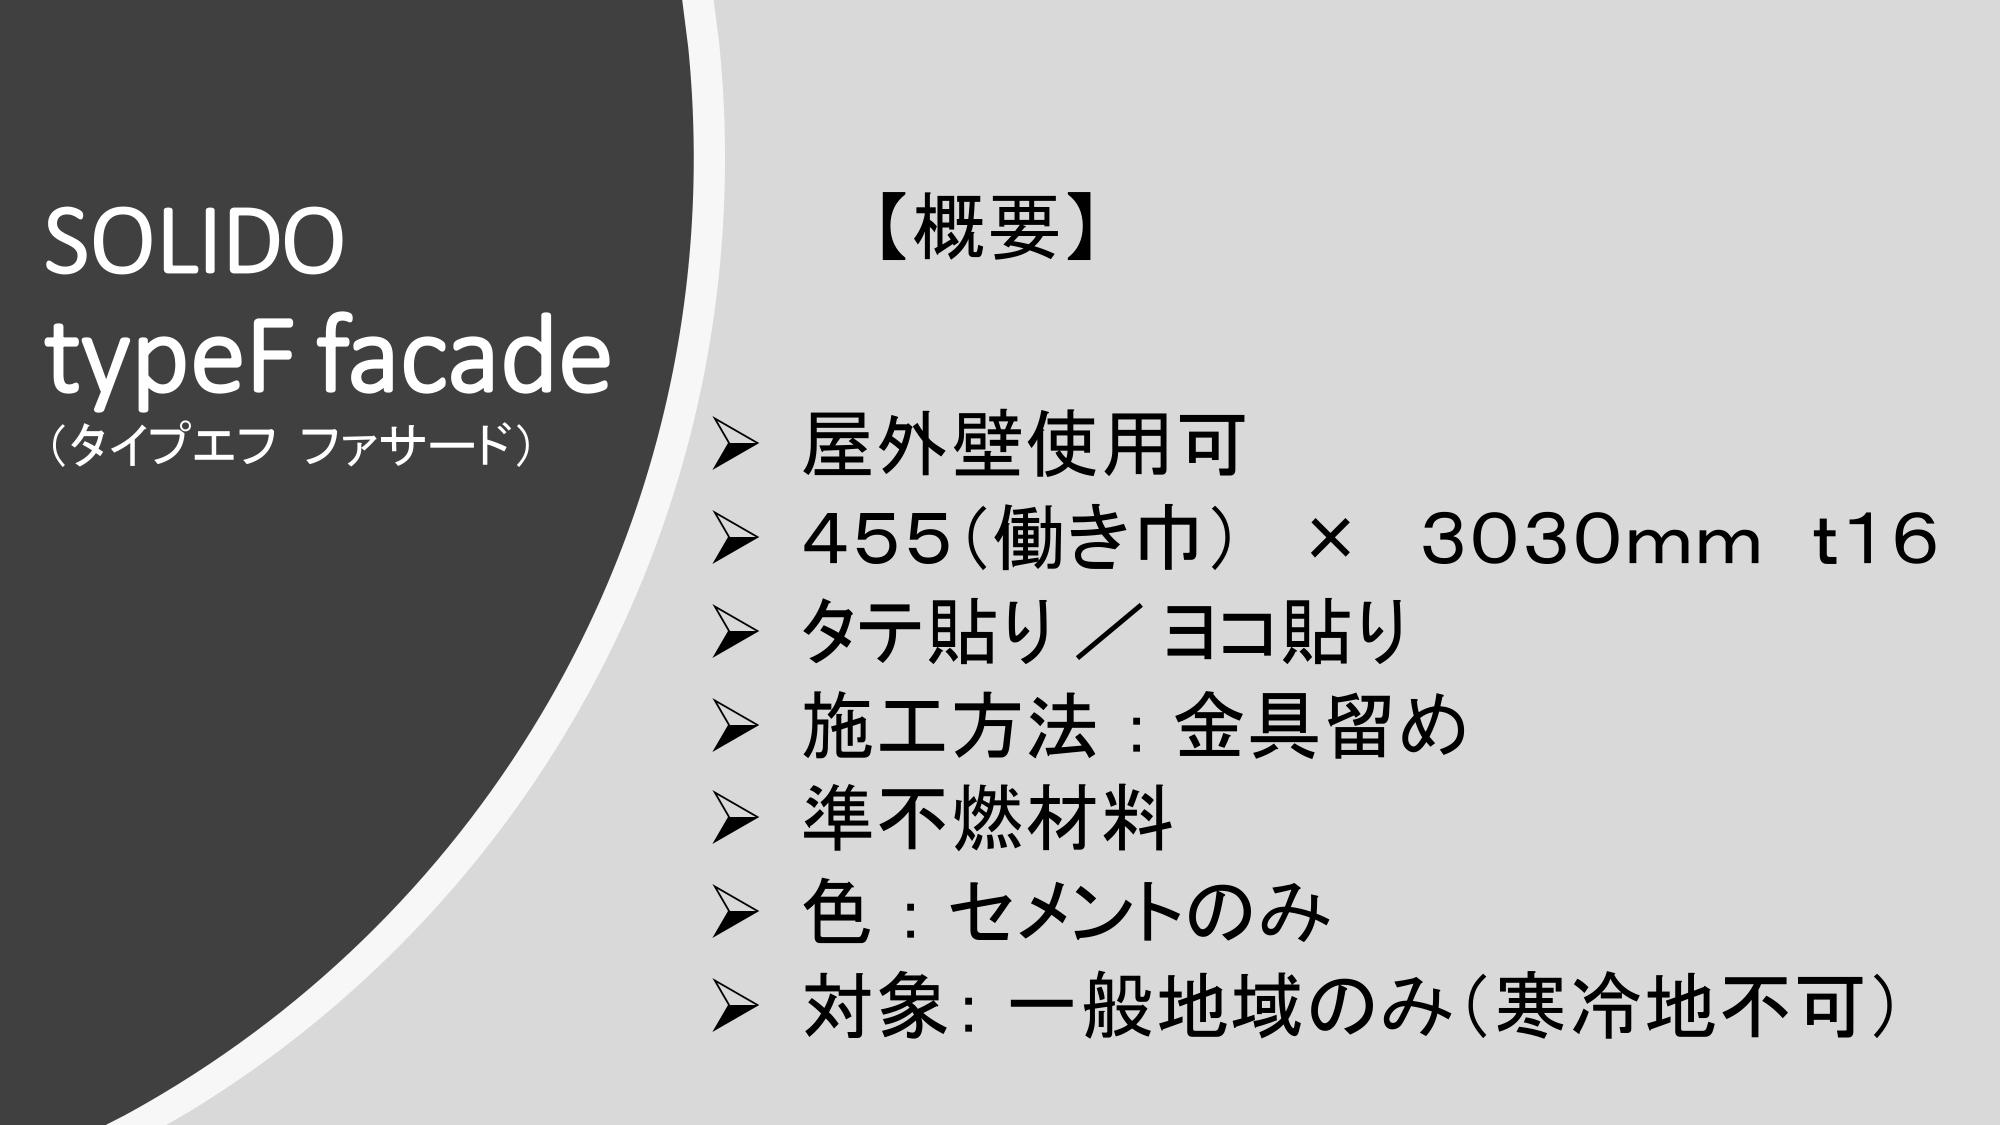 typeF facade概要(1)